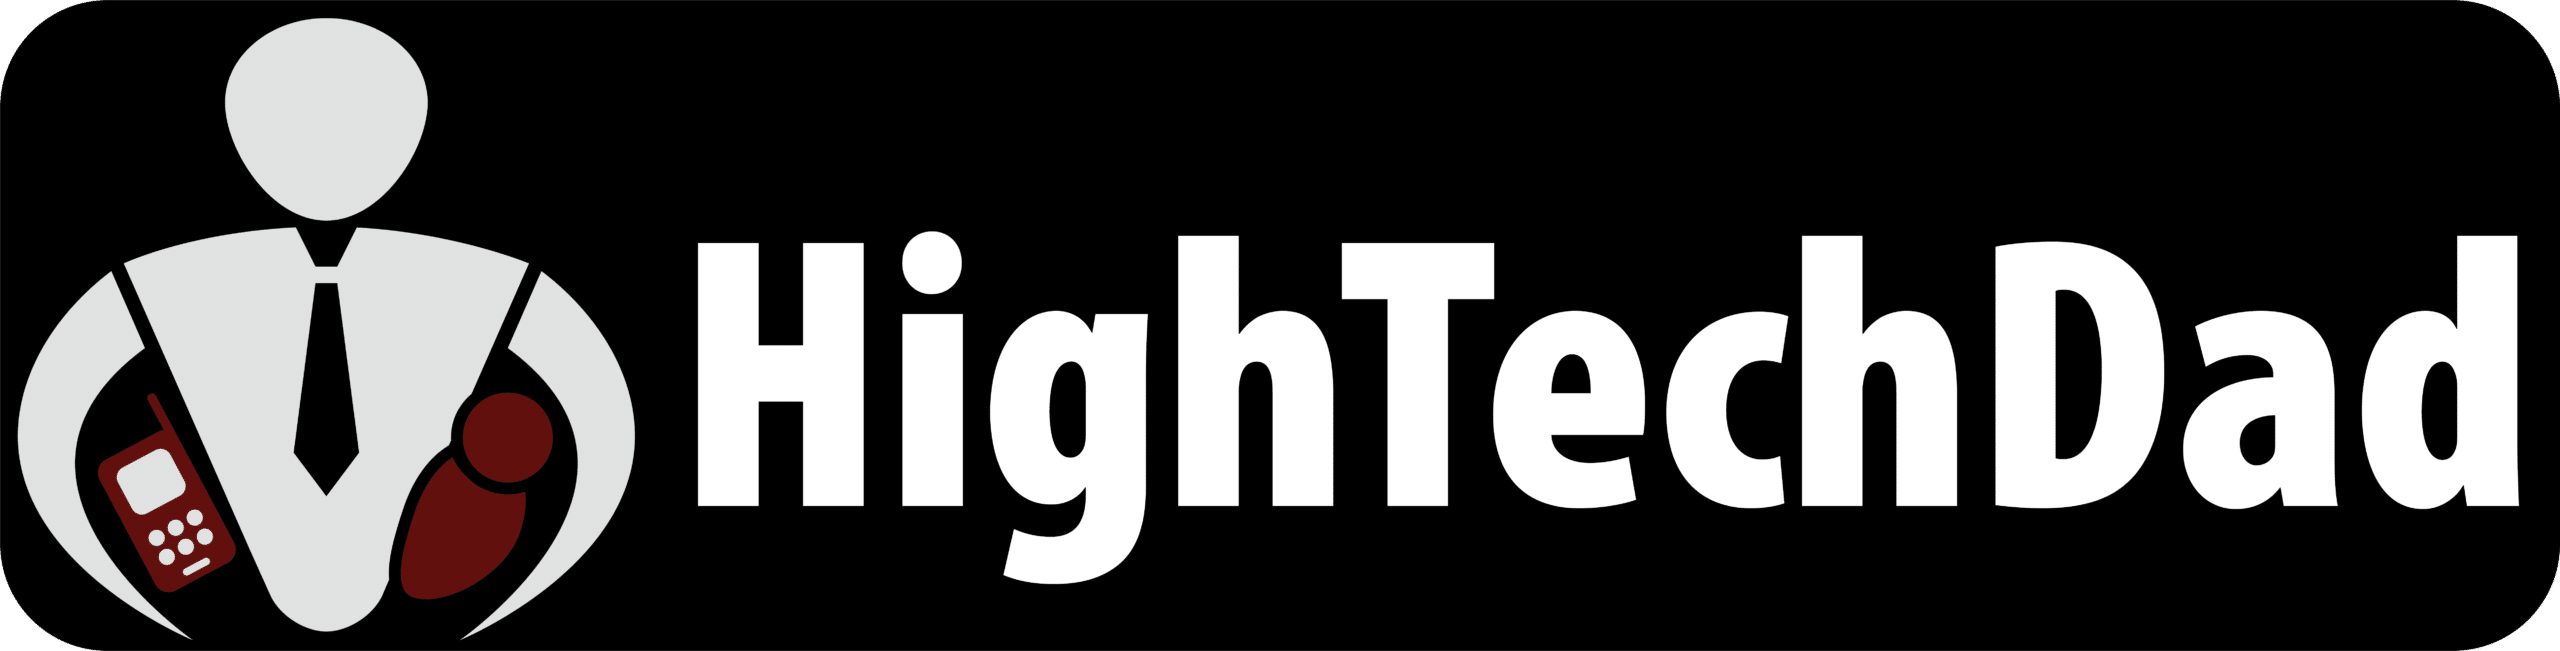 https://www.hightechdad.com/wp-content/uploads/2019/12/HTD-large-logo-TEXT-sq-bg-box-112319-black-bg.png